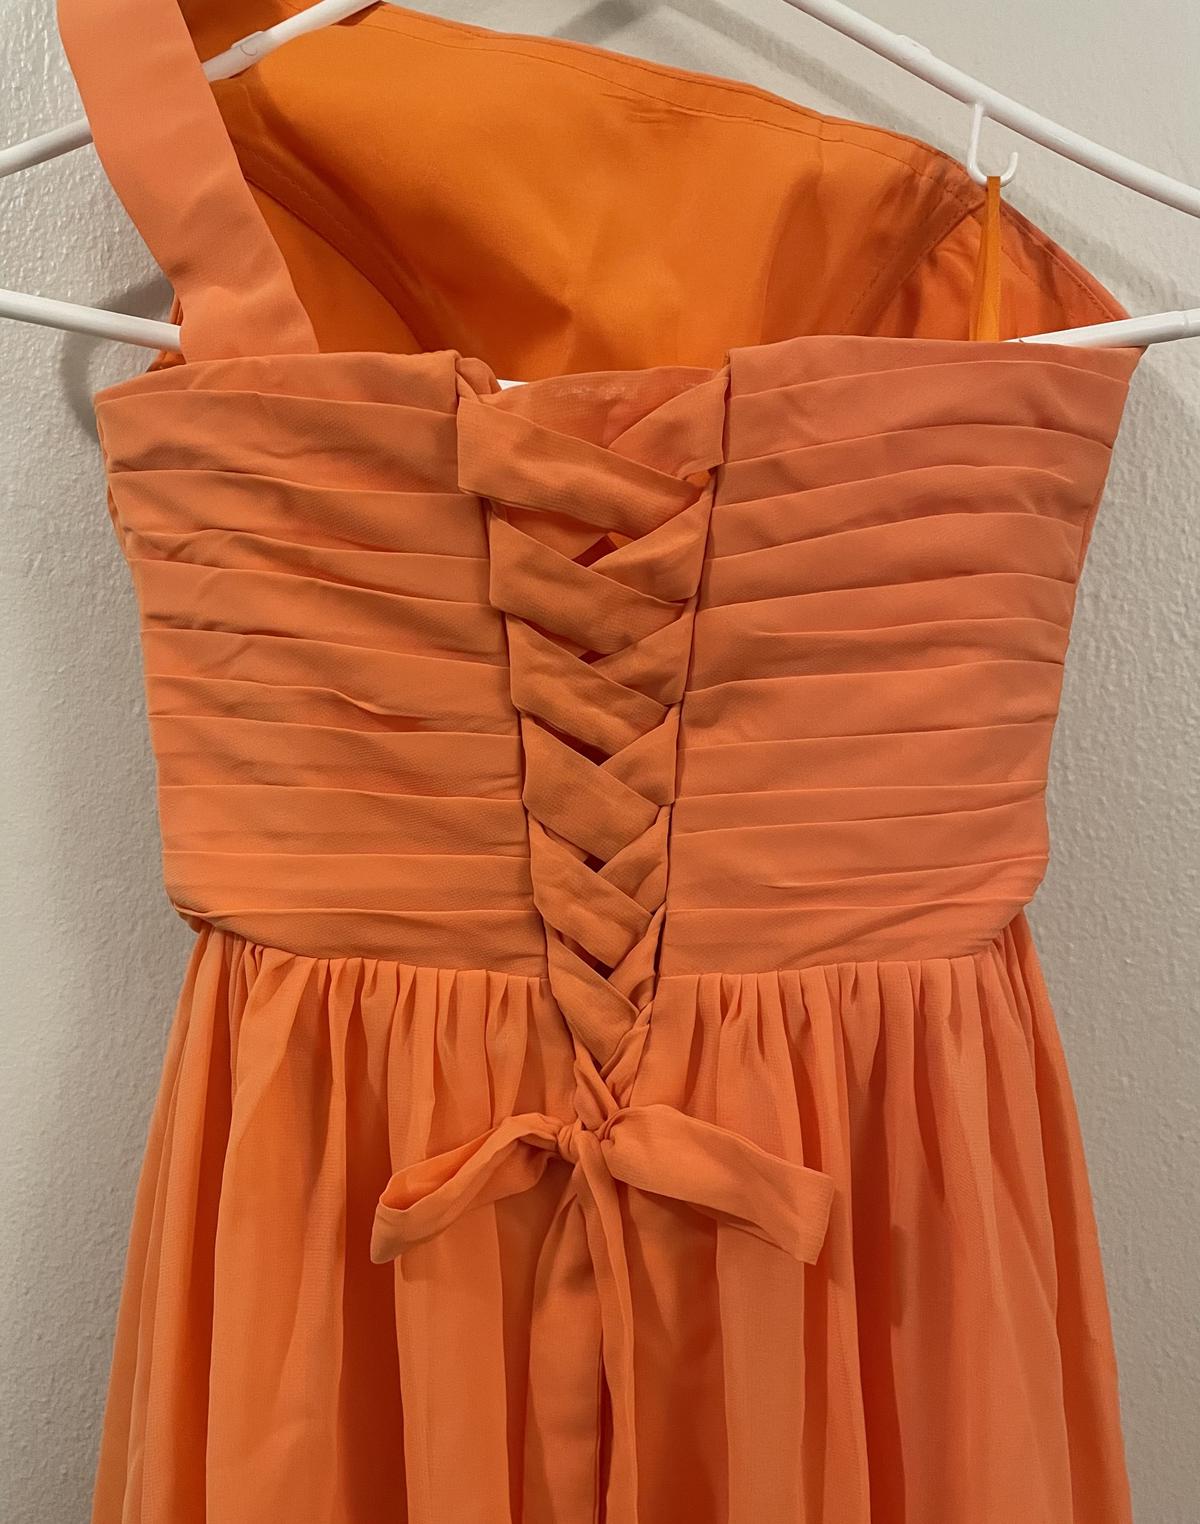 Zaxants Orange Size 0 Short Height Bridesmaid One Shoulder Straight Dress on Queenly